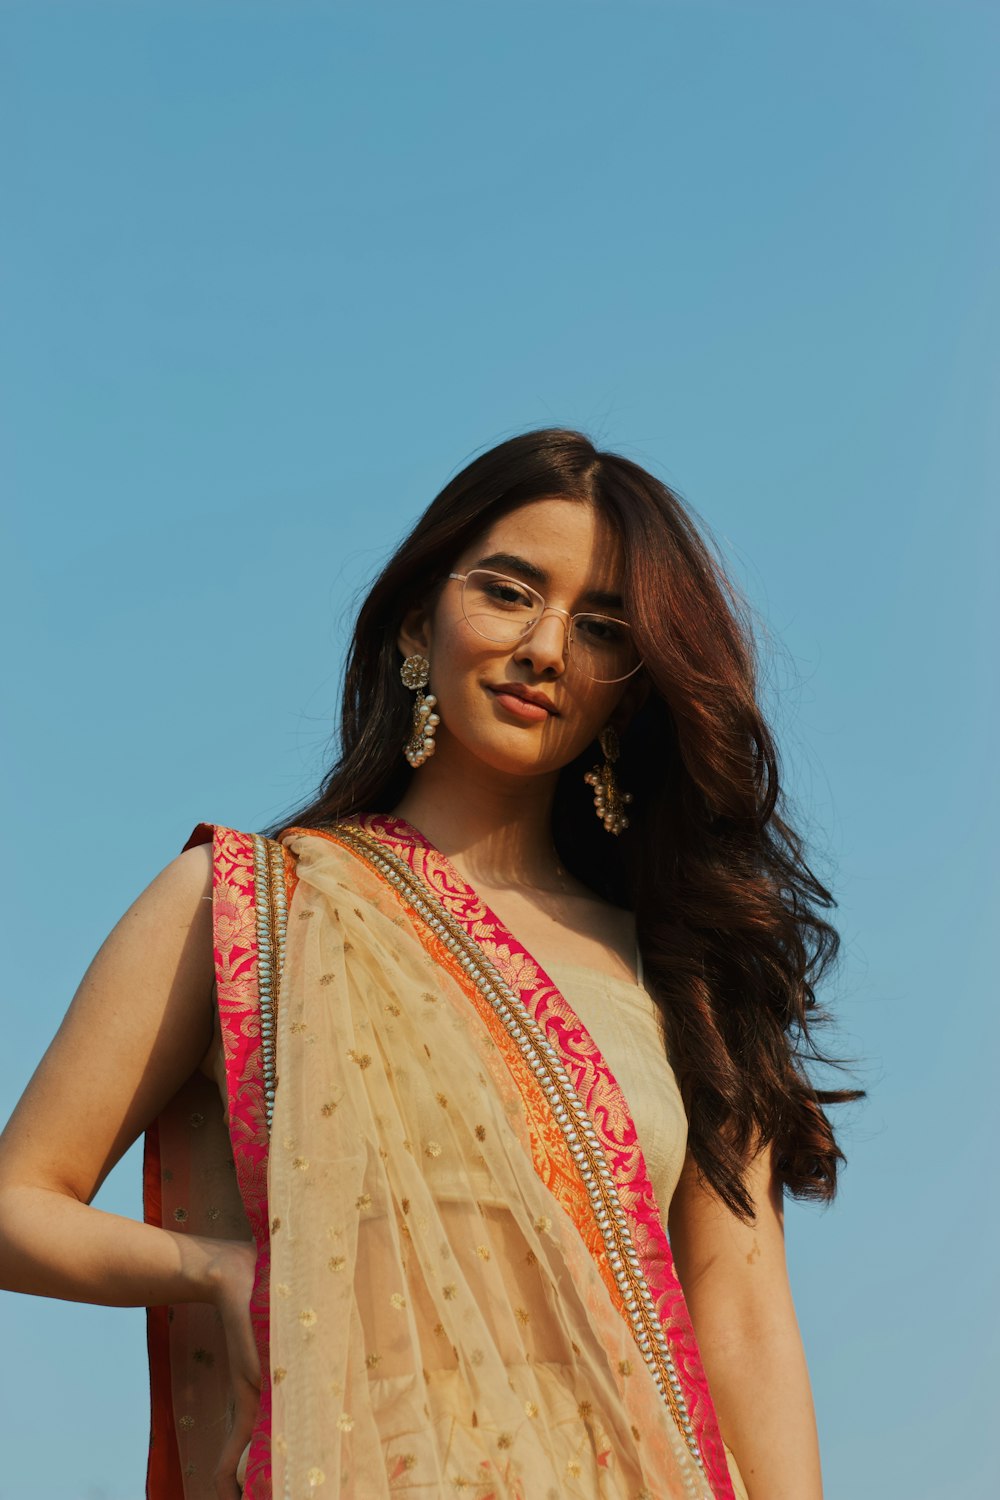 Sari Pictures | Download Free Images on Unsplash